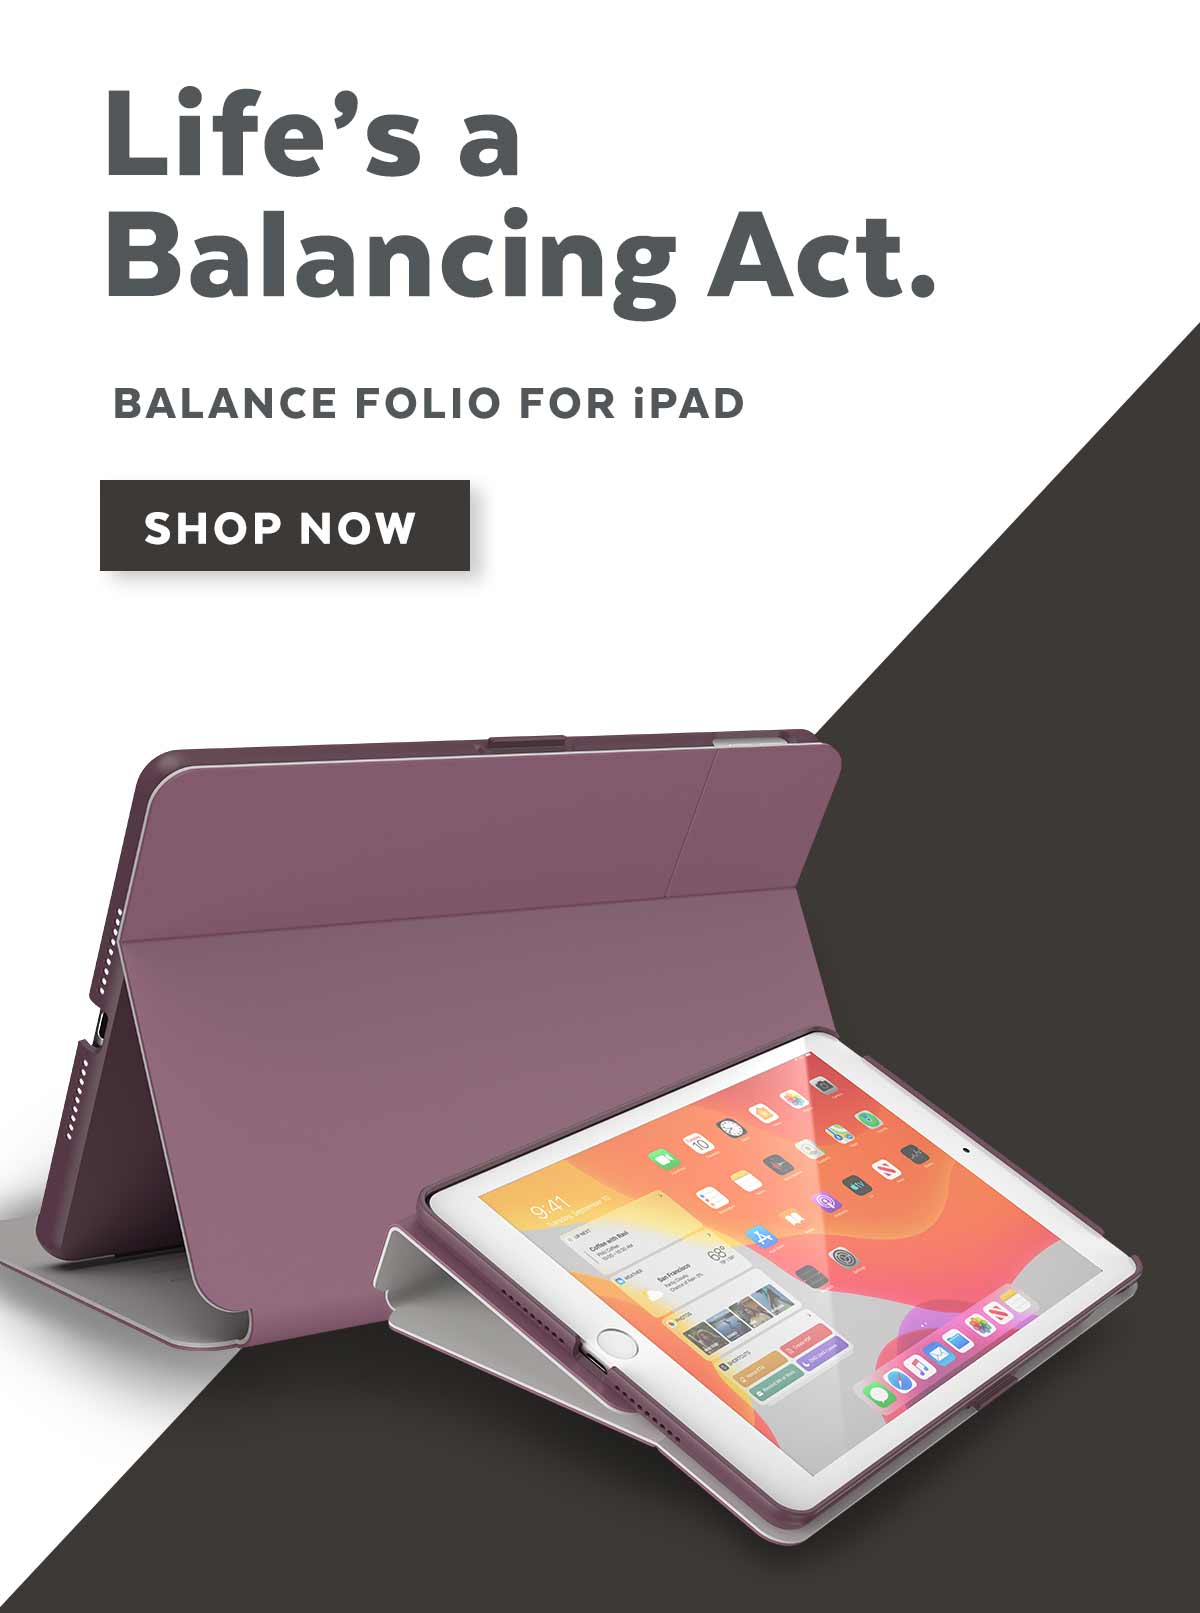 Life's a Balancing Act. Balance Folio for iPad. Shop now.